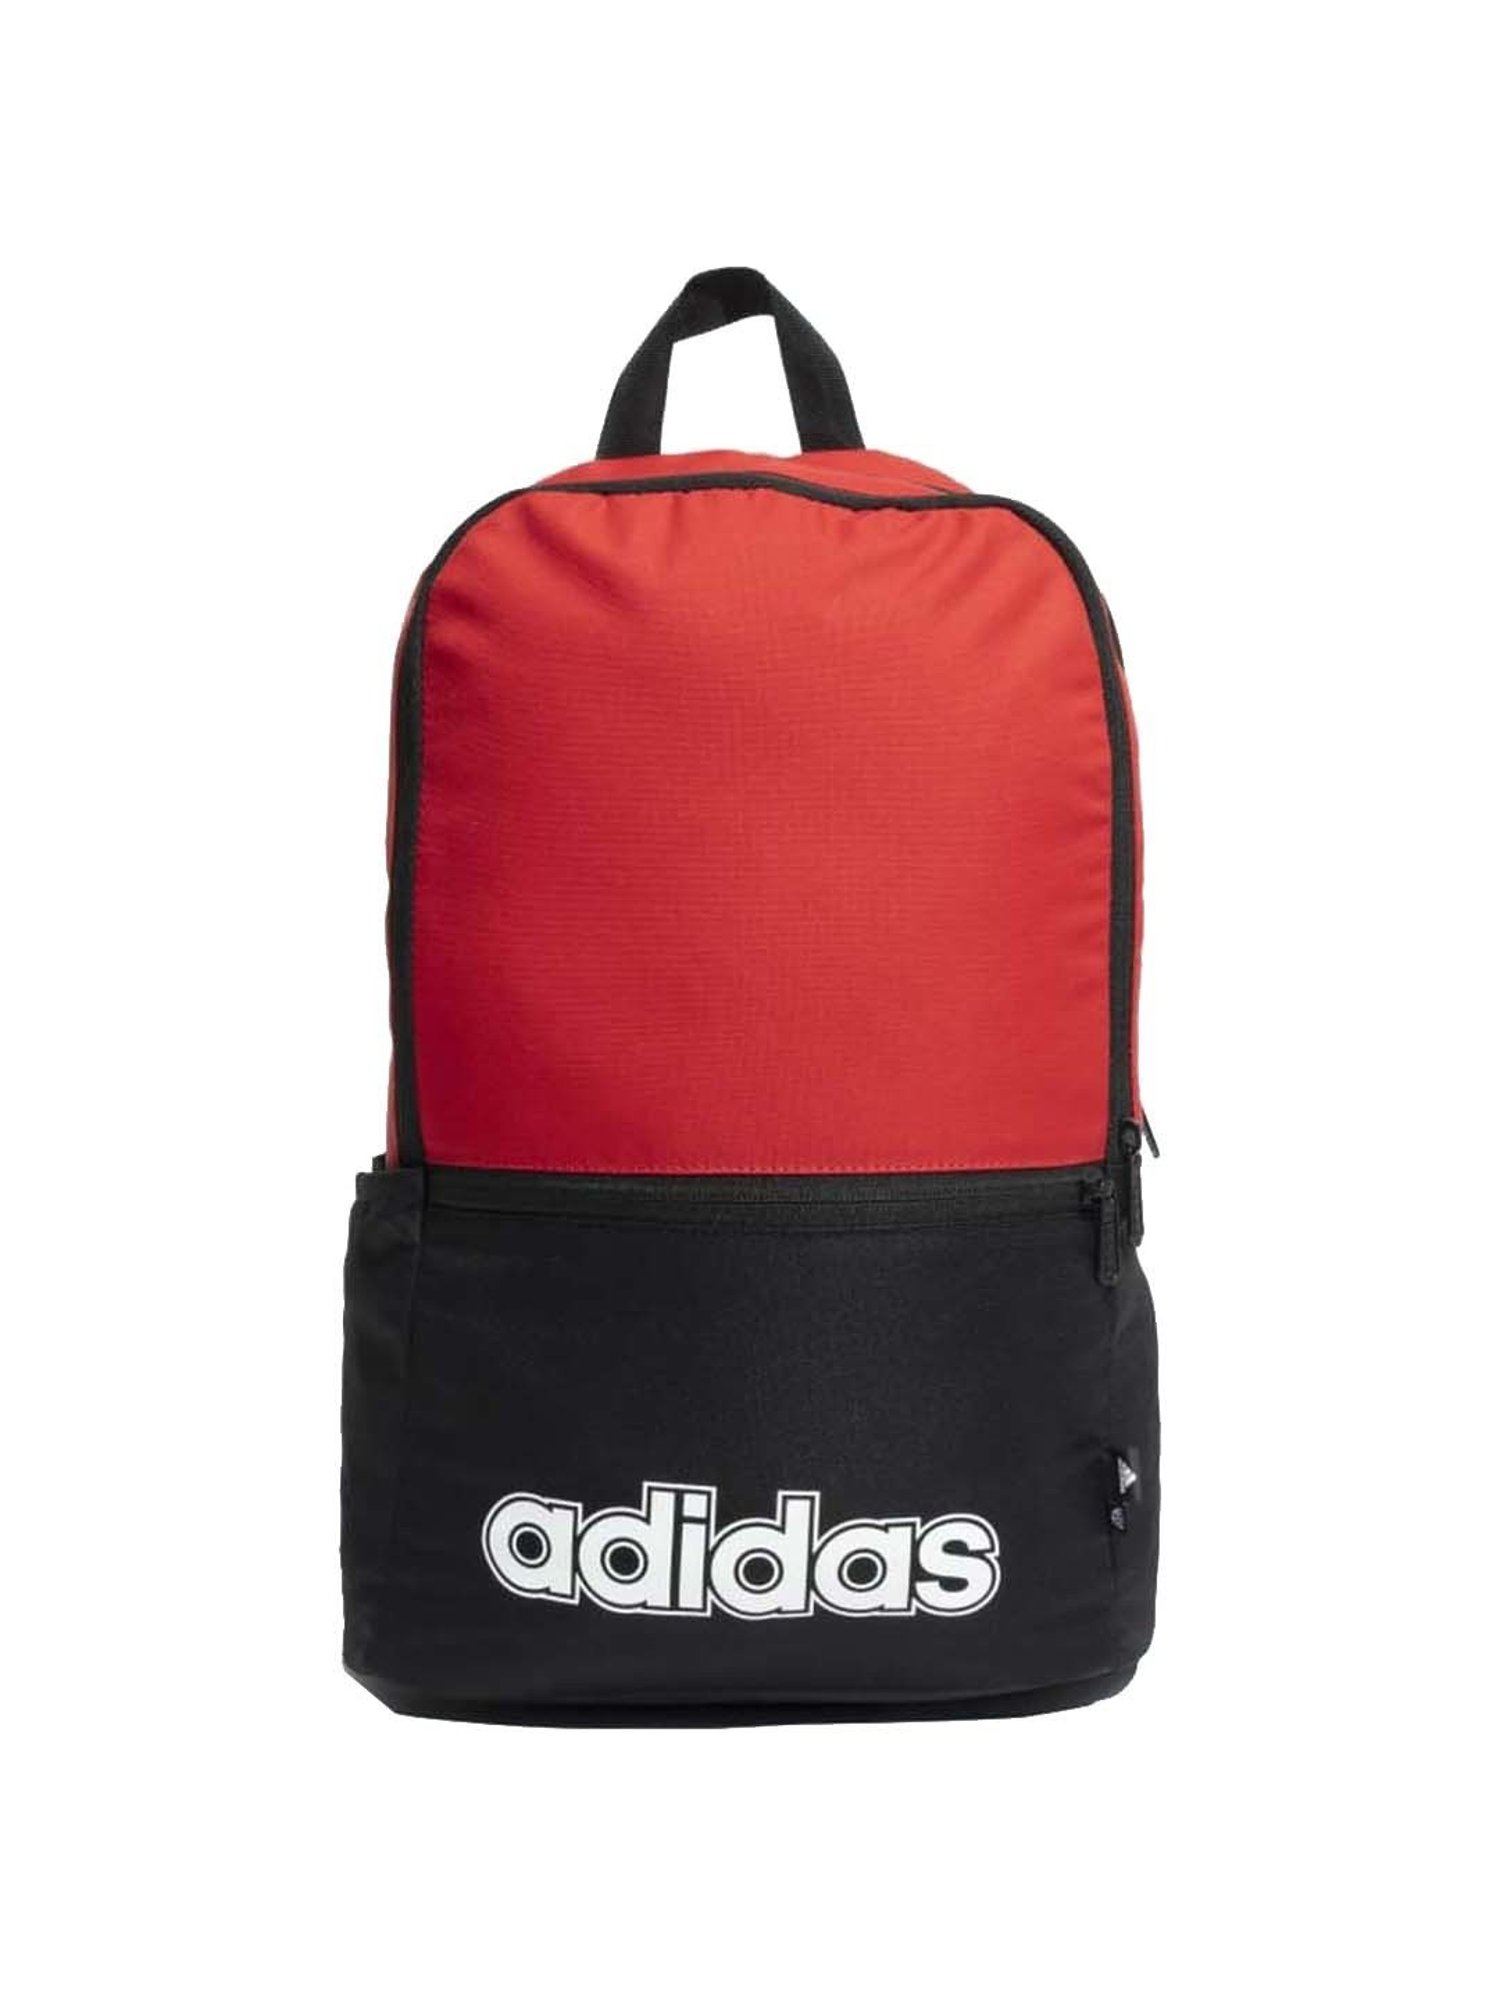 Original ADIDAS Red Footed Gym Bag Sports Bag 1970s | Etsy | Bags, Red  adidas, Sport bag